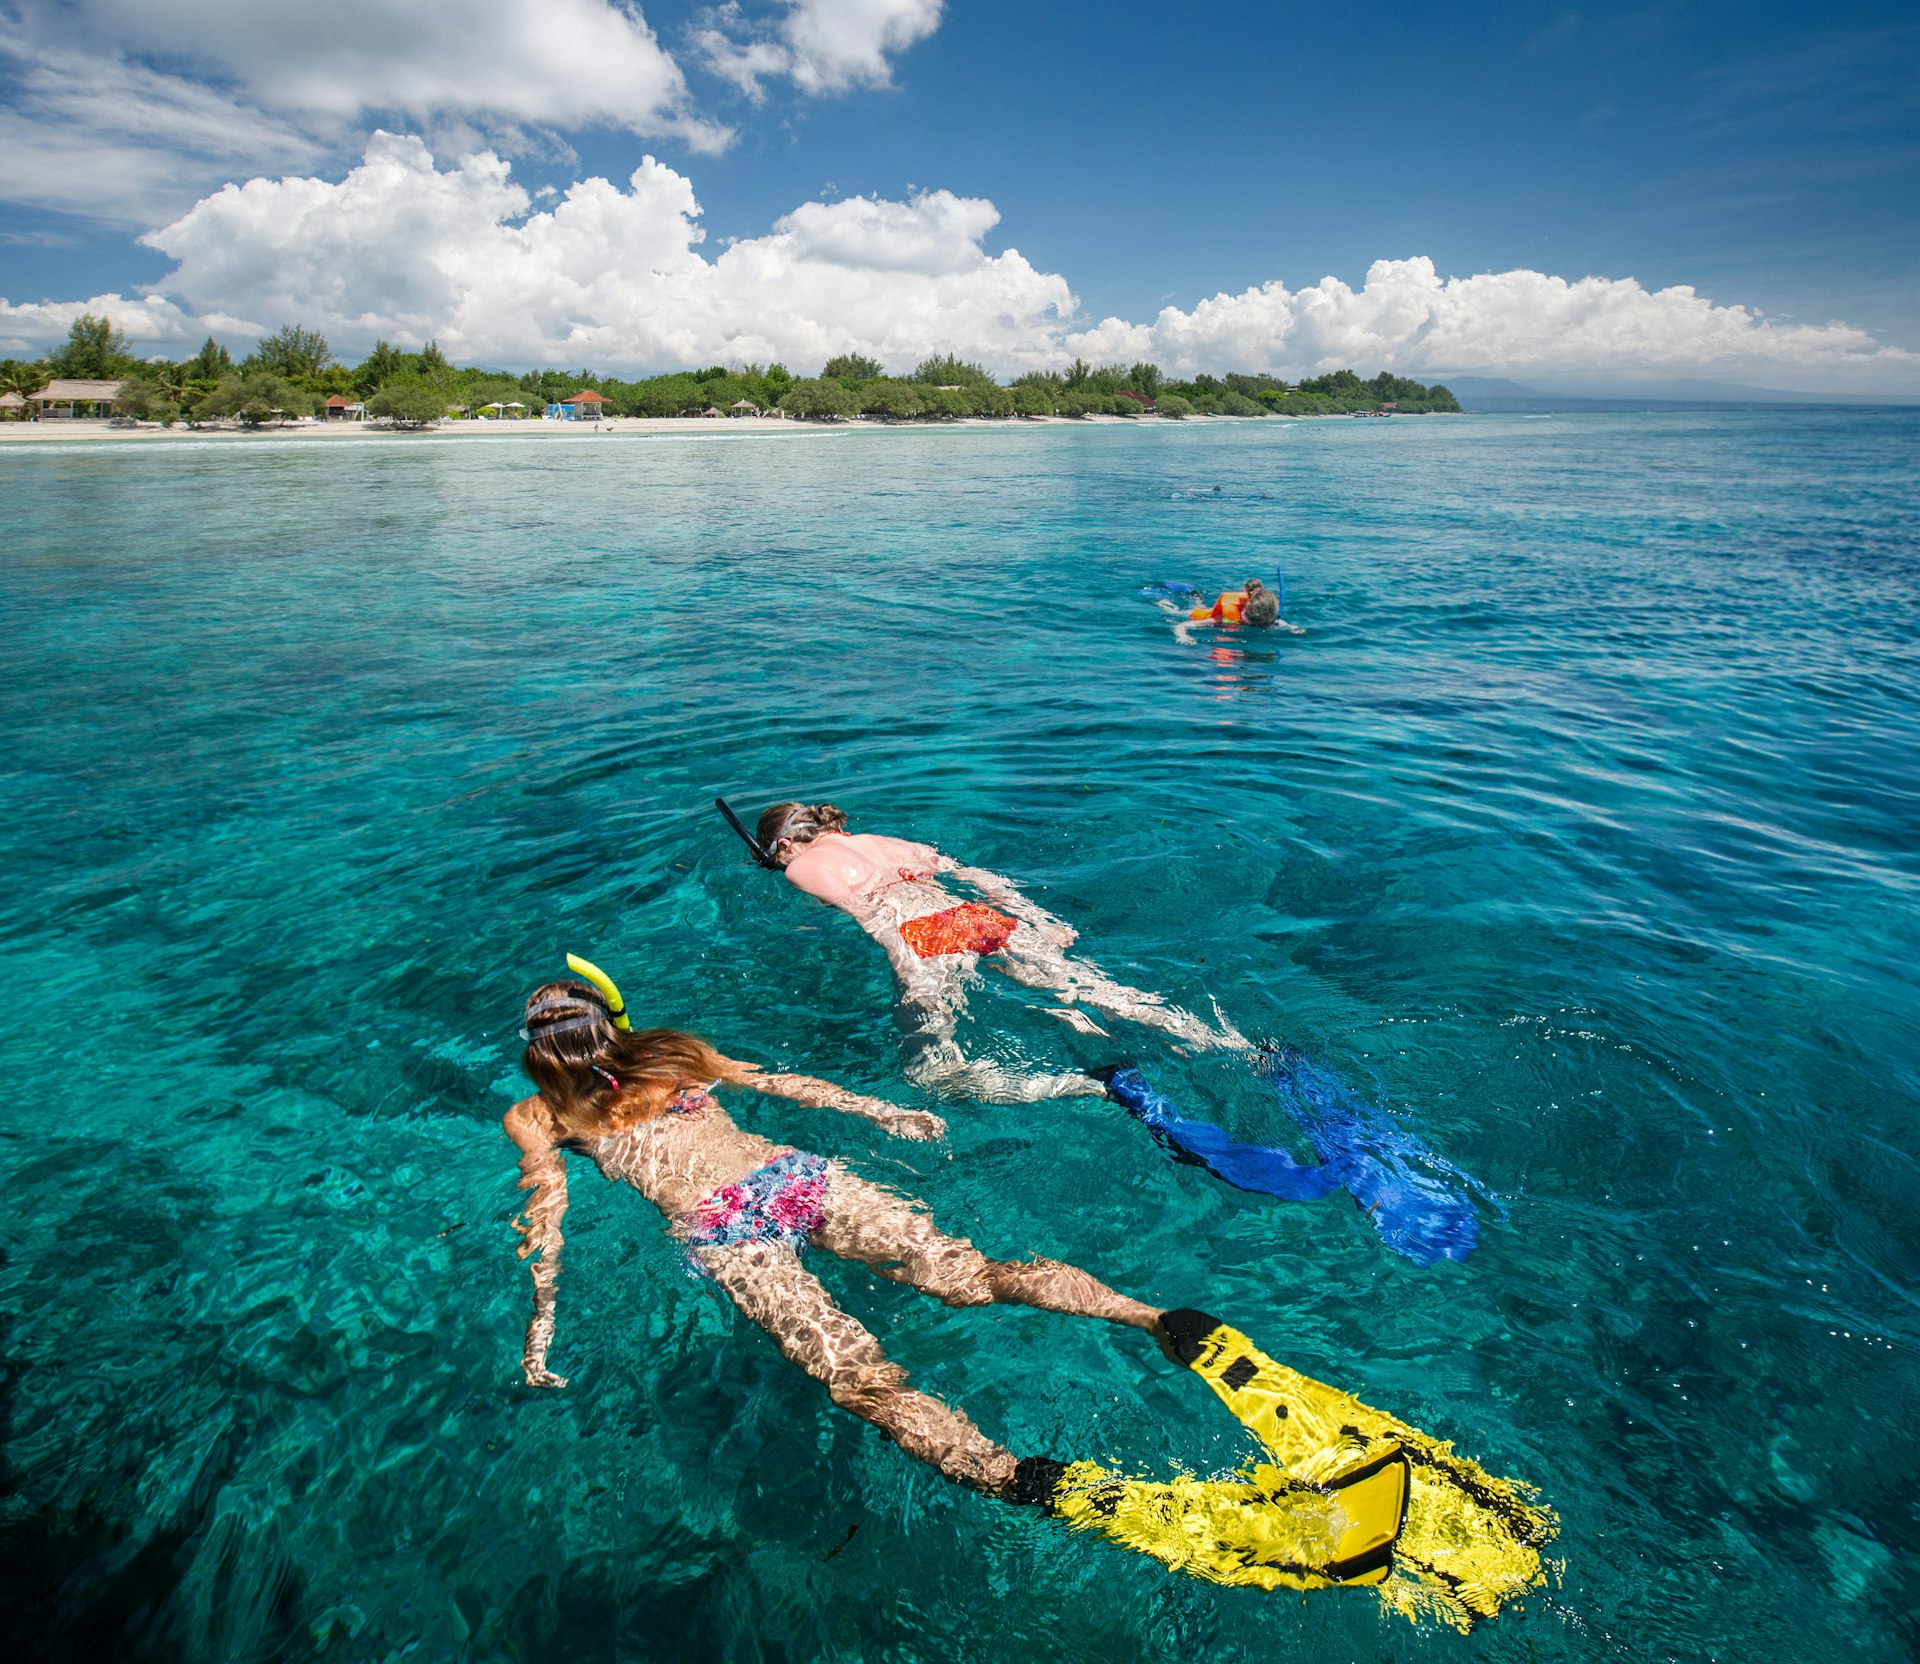 Two ladies snorkelling in the clear tropical sea near the island of Gili Trawangan, Indonesia.